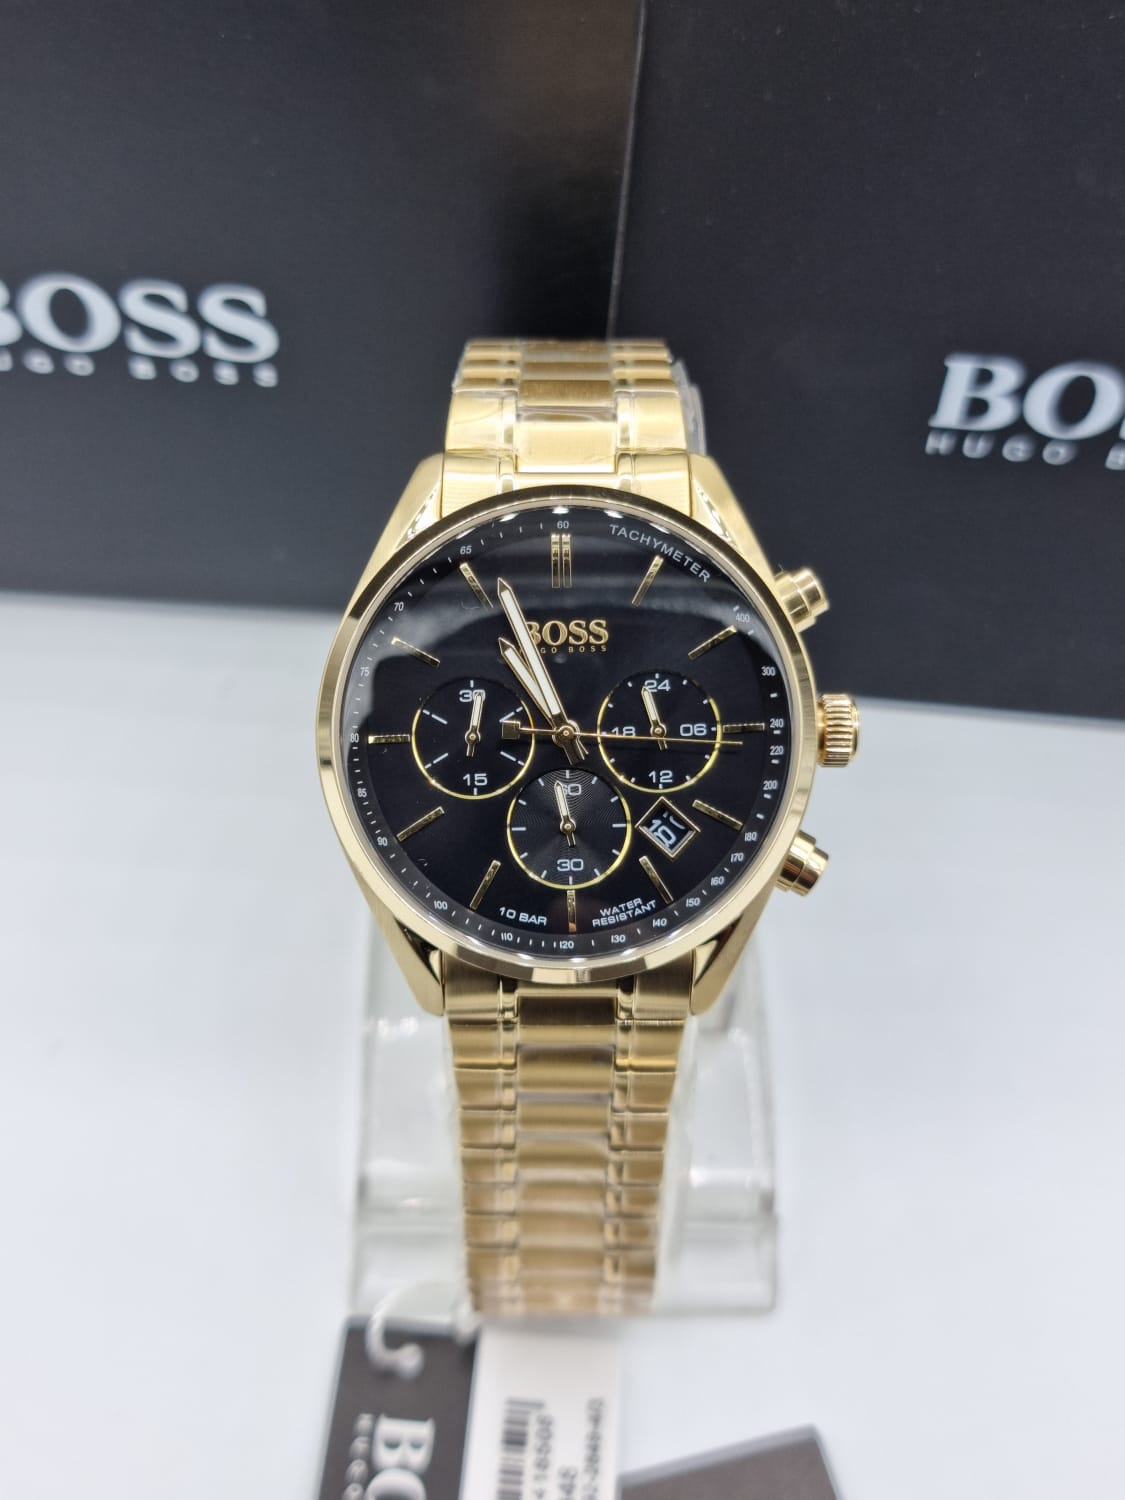 Hugo Boss Champion Black Dial Gold Steel Strap Watch for Men - 1513848